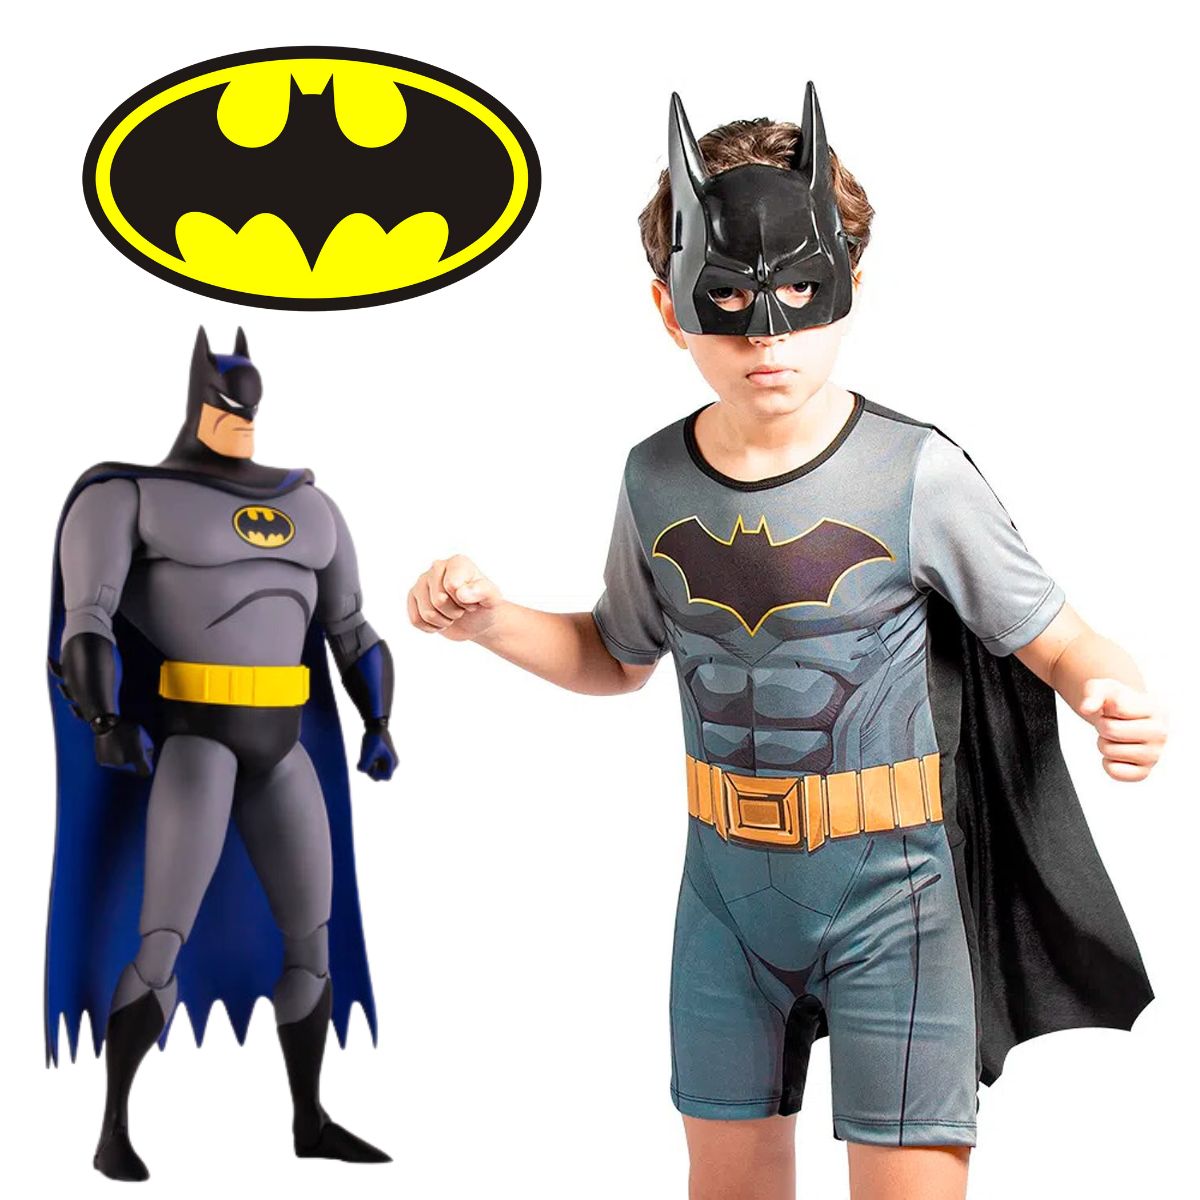 Fantasia Batman Infantil Original Curta Super Herói Com Máscara E Capa